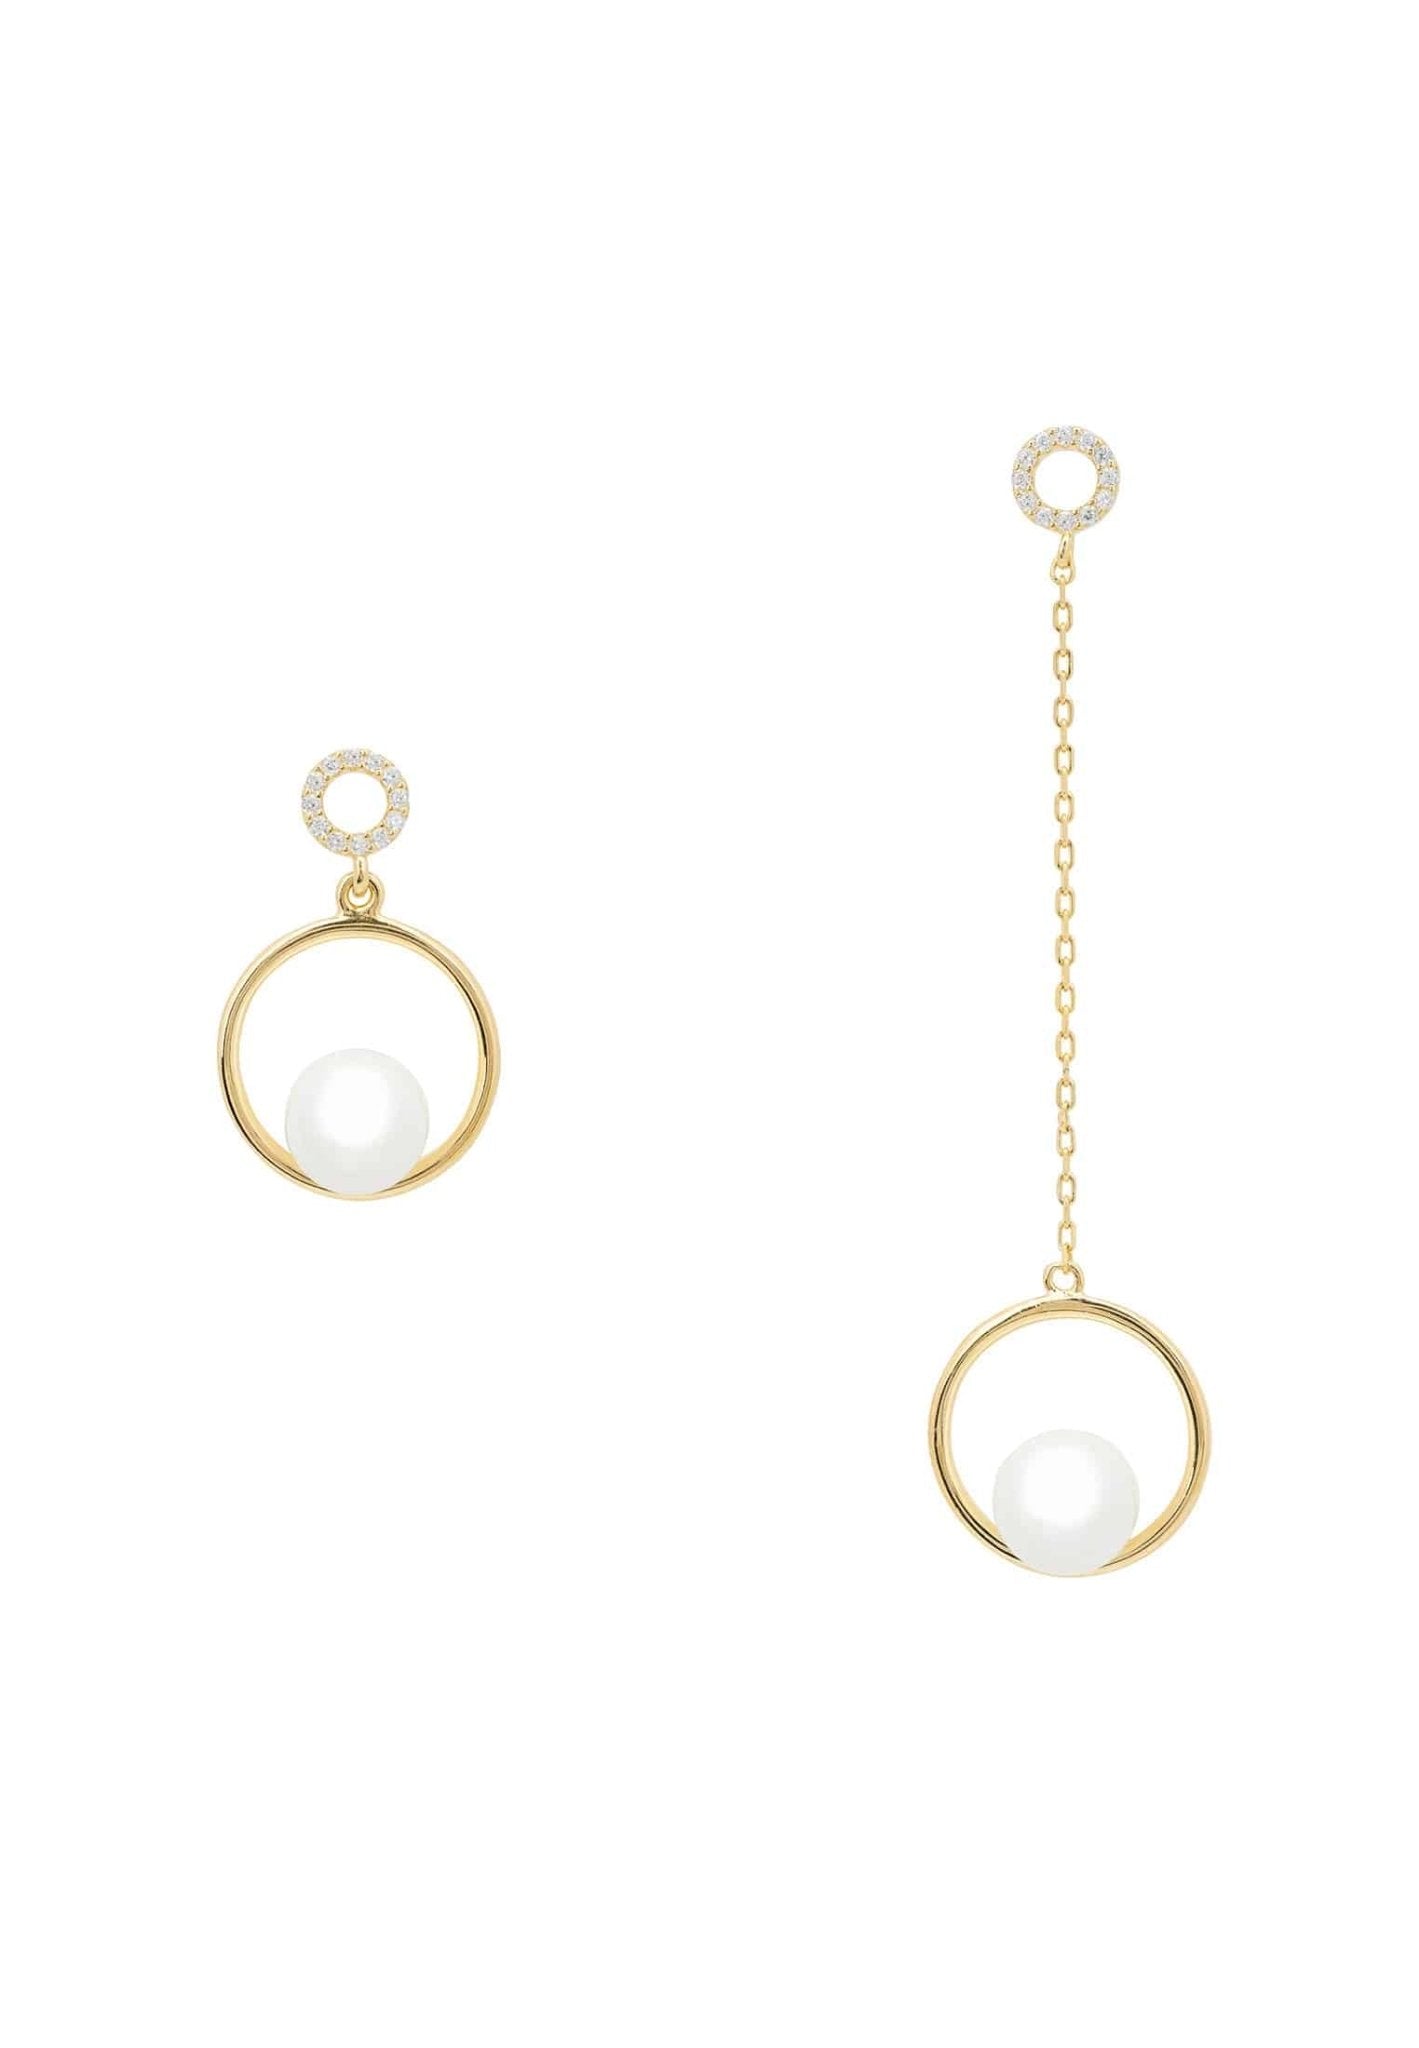 Asymmetric Circle & Pearl Earrings Gold - LATELITA Earrings